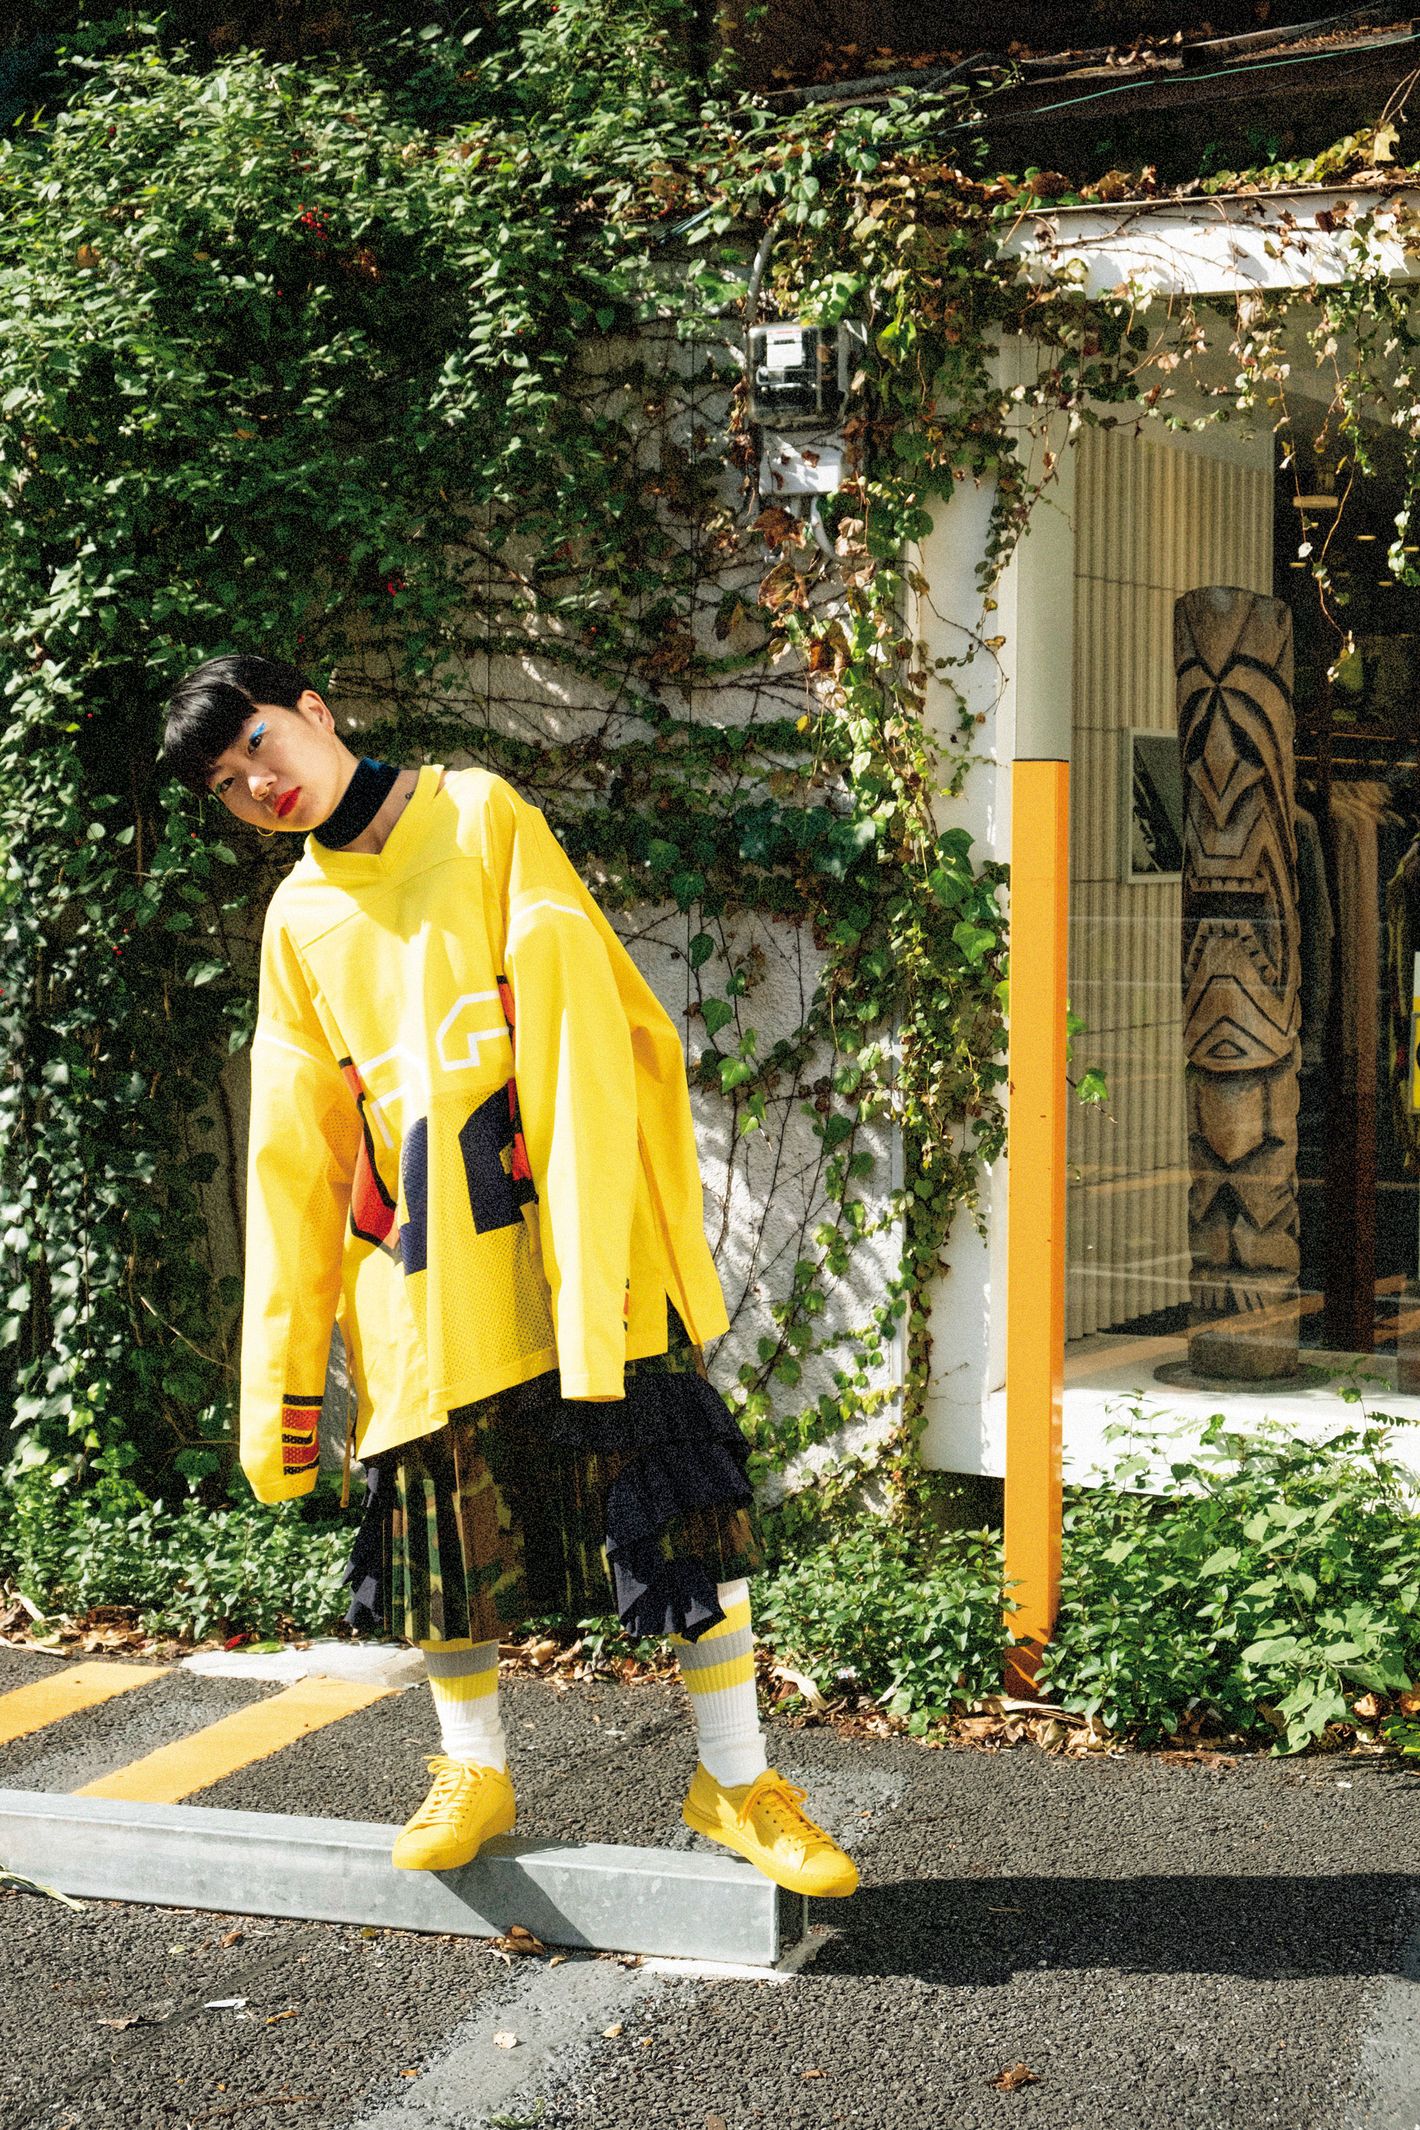 Beyond Harajuku: On Tokyo’s Fashion Landscape Now